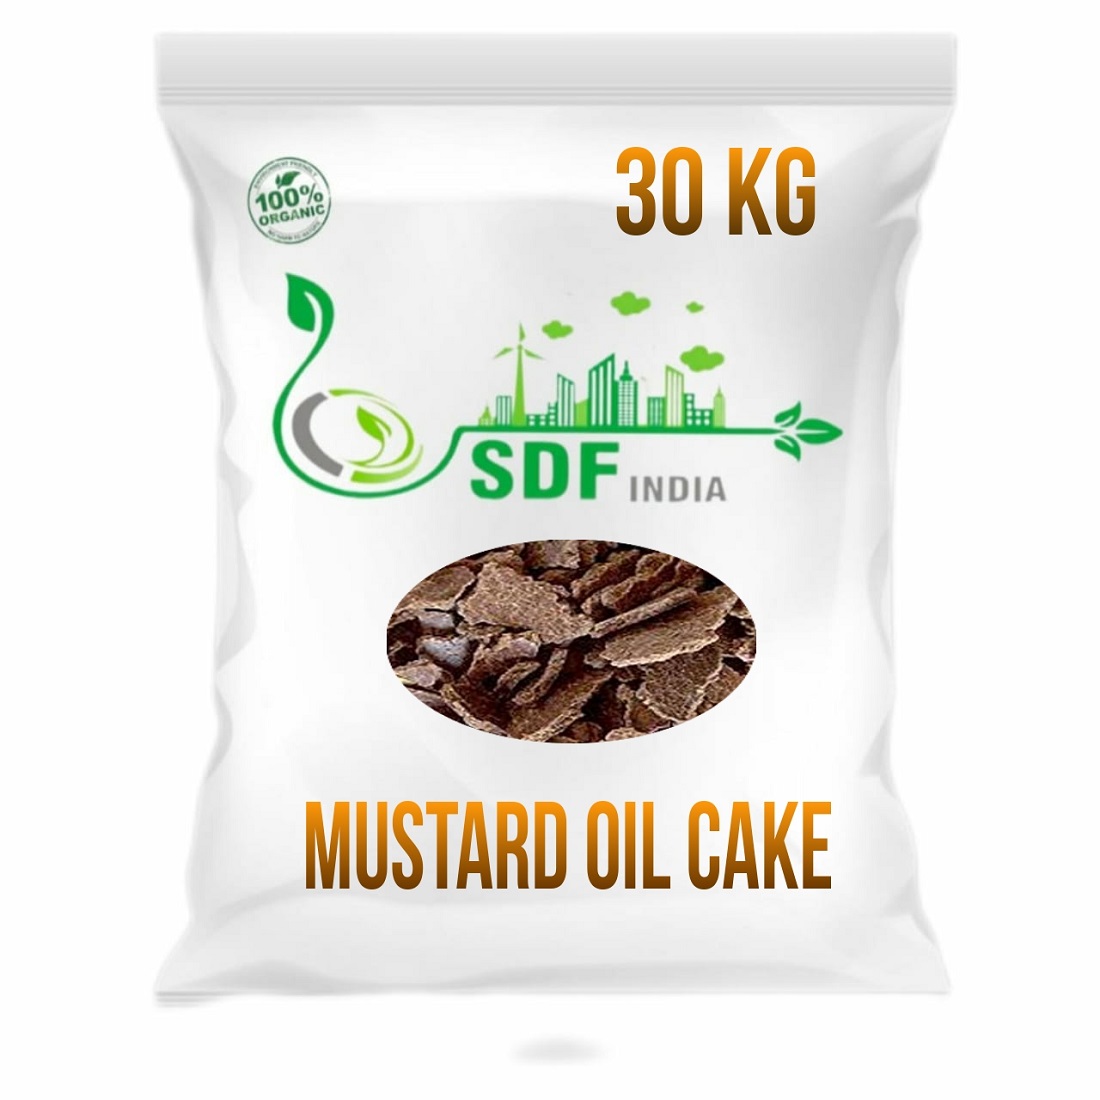 SDF INDIA Mustard Oil Cake Organic Fertilizer for Home Garden, Potting Plant Growth Nutrient ( 30 kg )